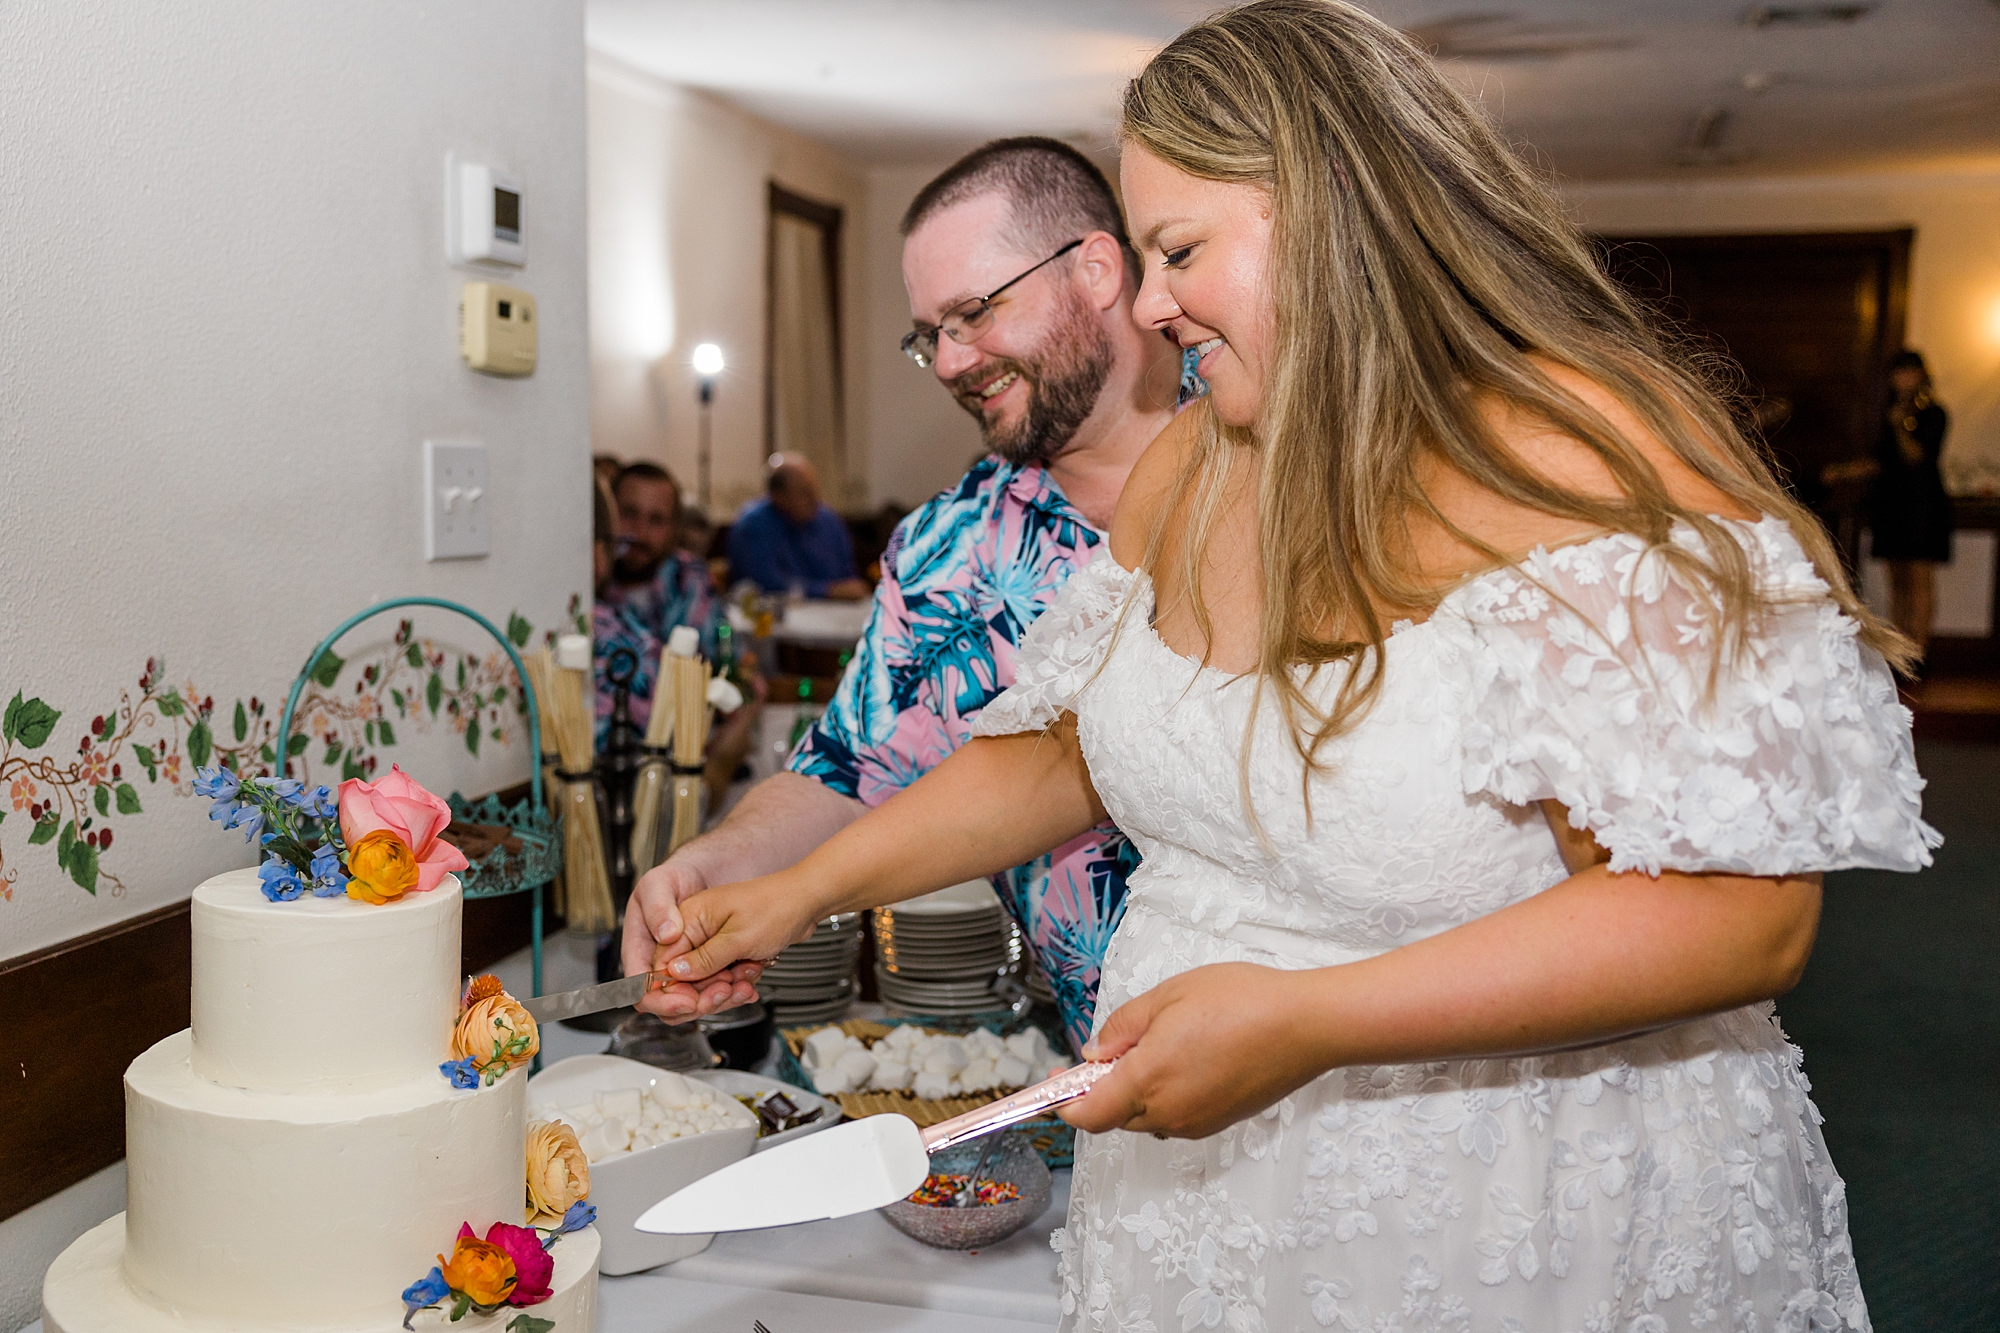 Couple cut their wedding cake